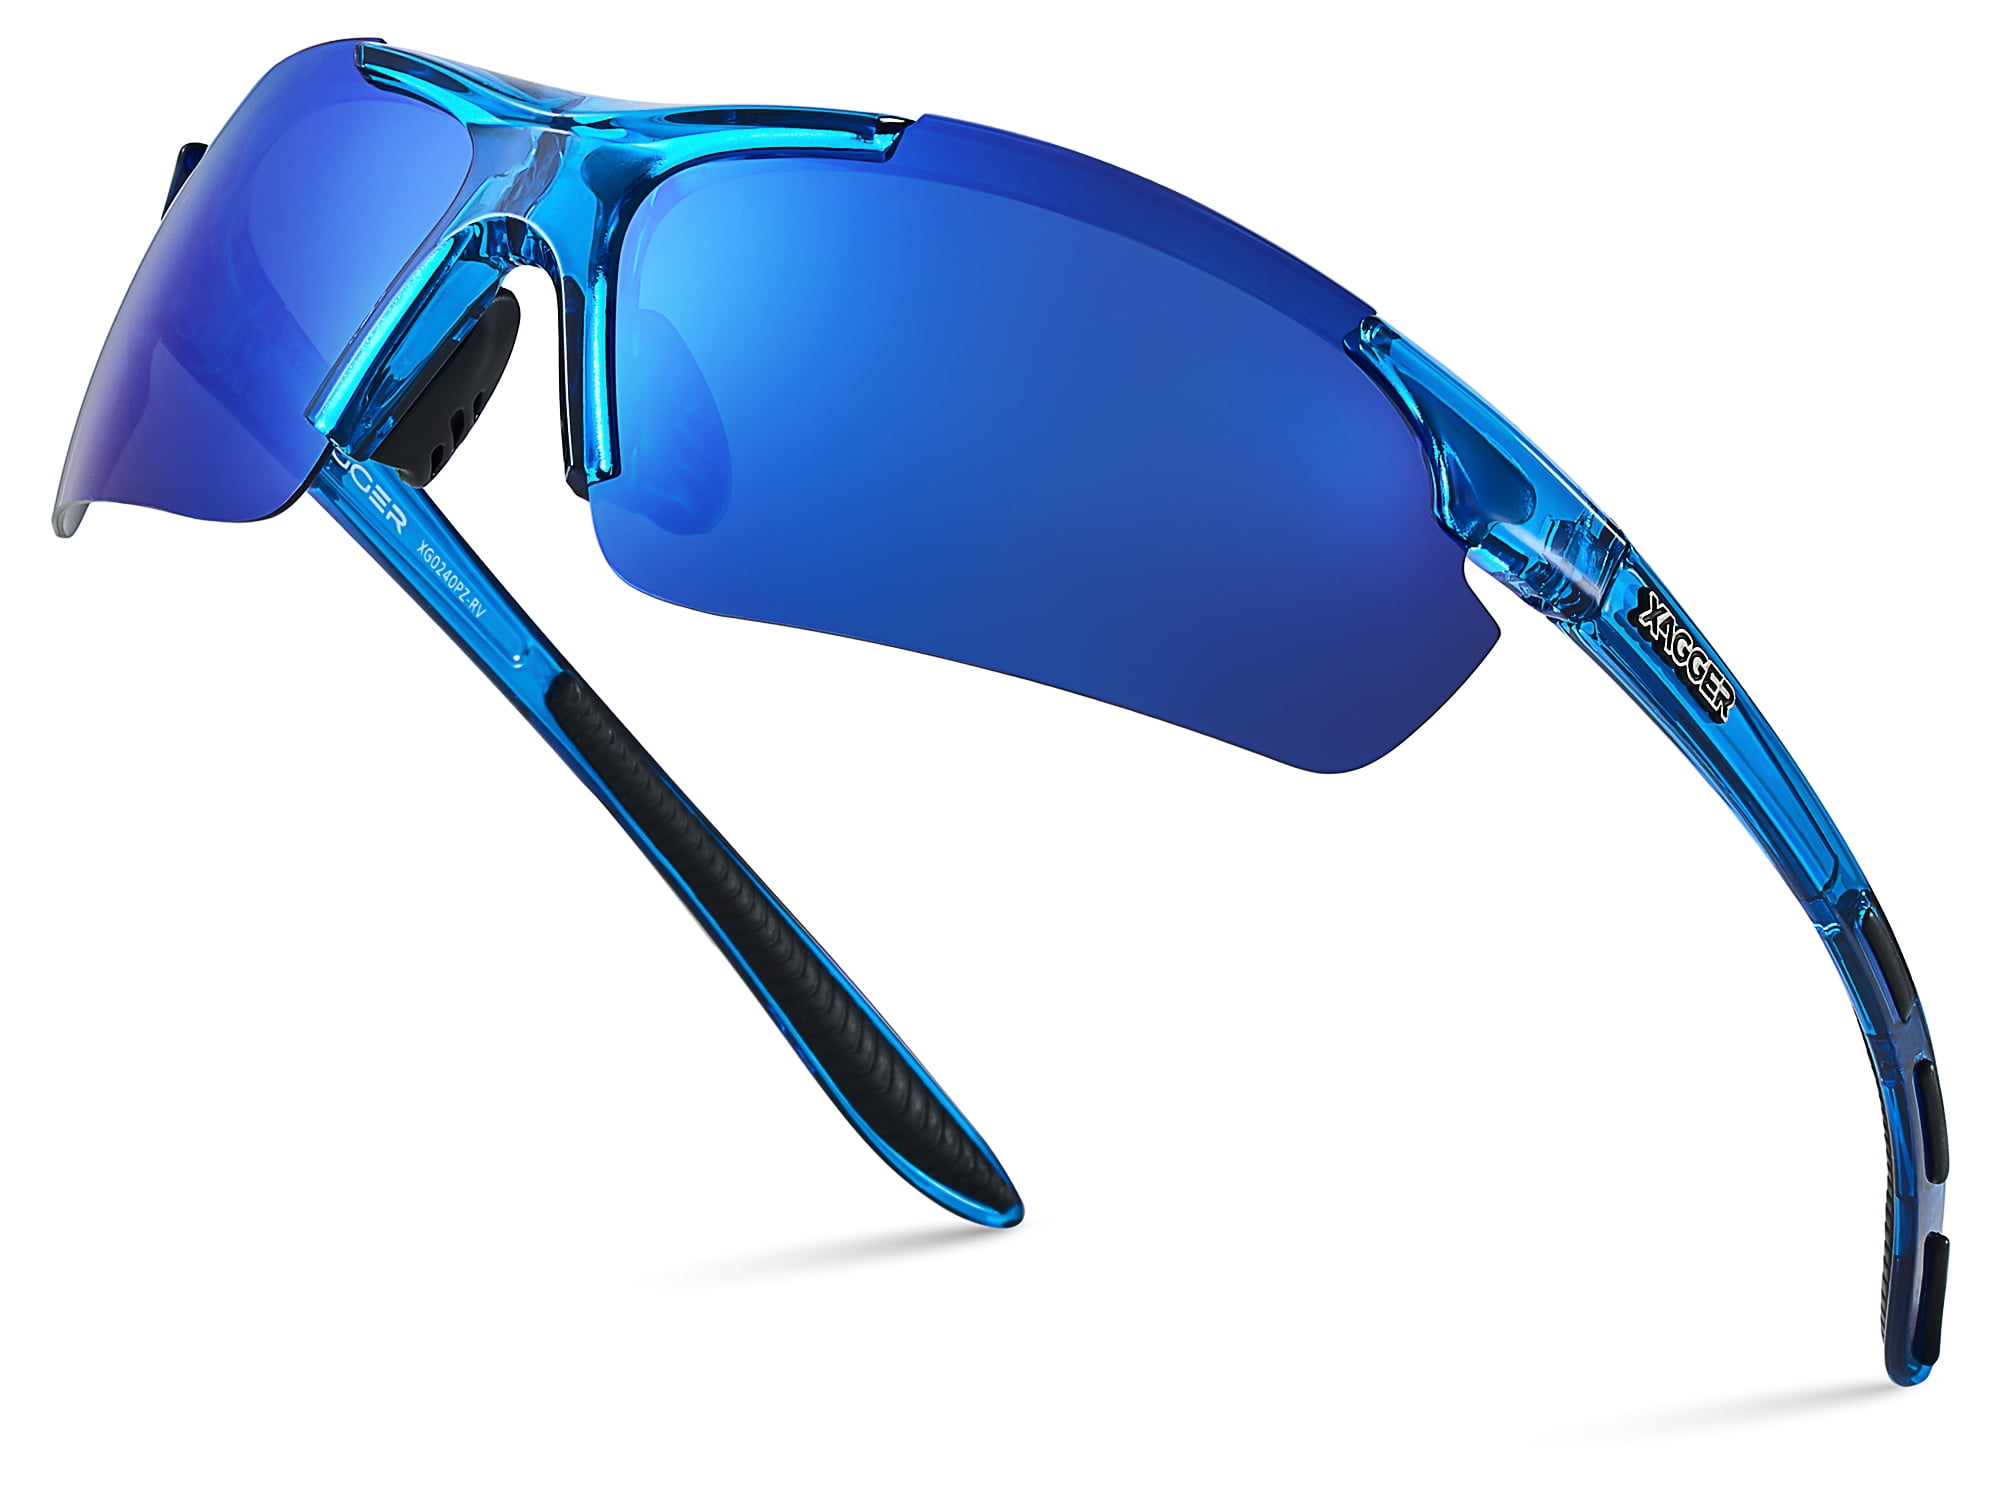 Xagger Polarized Sport Sunglasses for Men Women UV400 Wrap Around